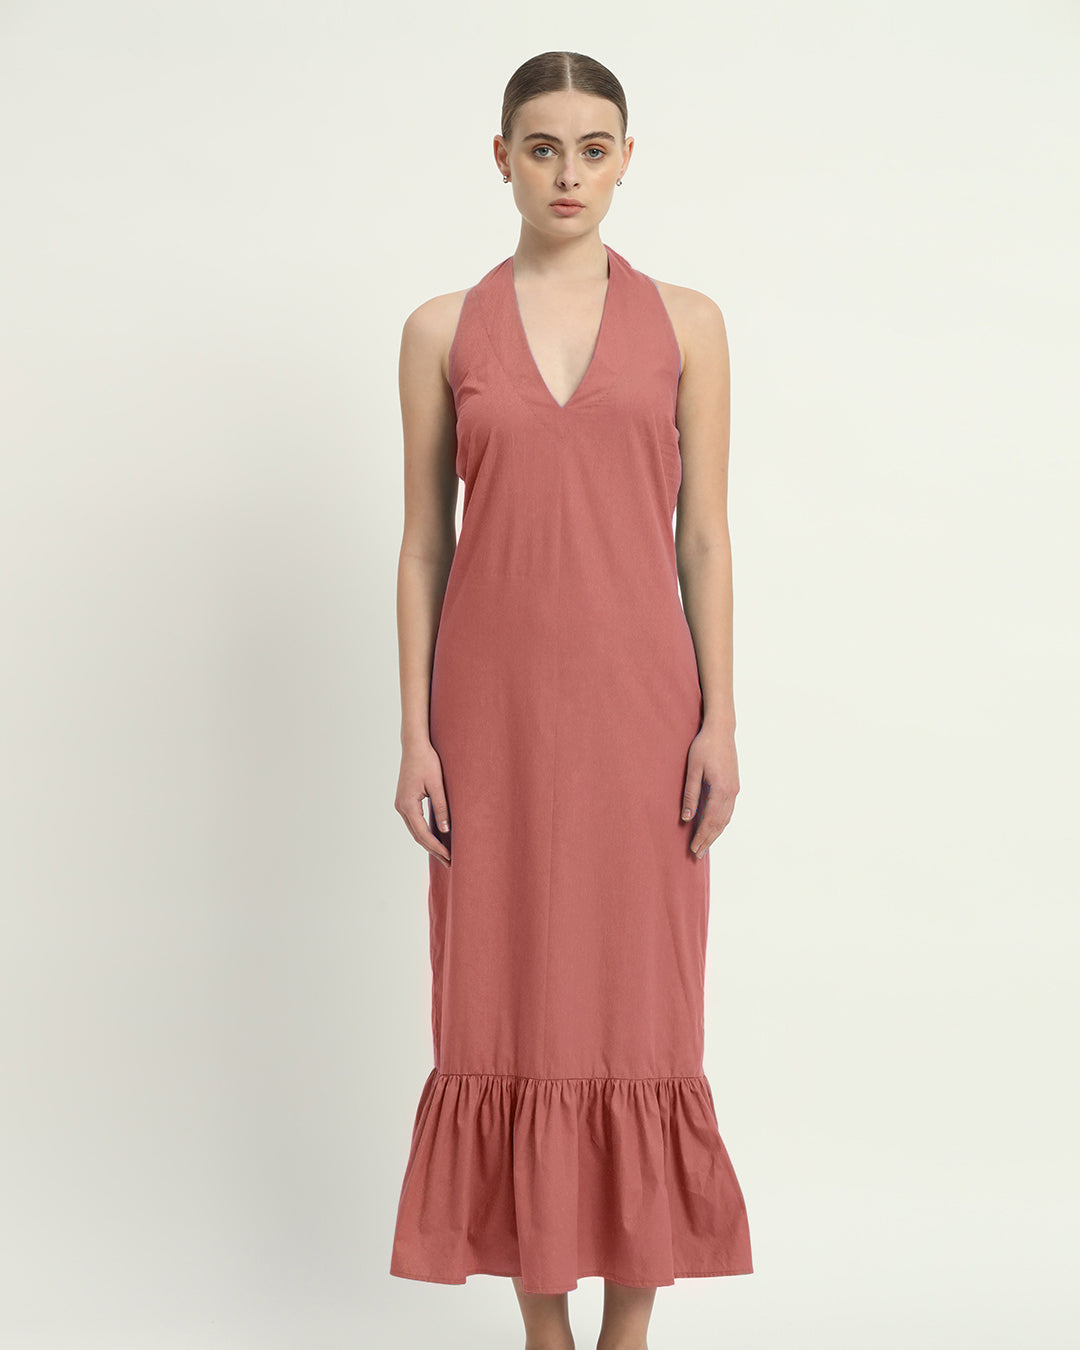 The Ivory Pink Wellsville Cotton Dress